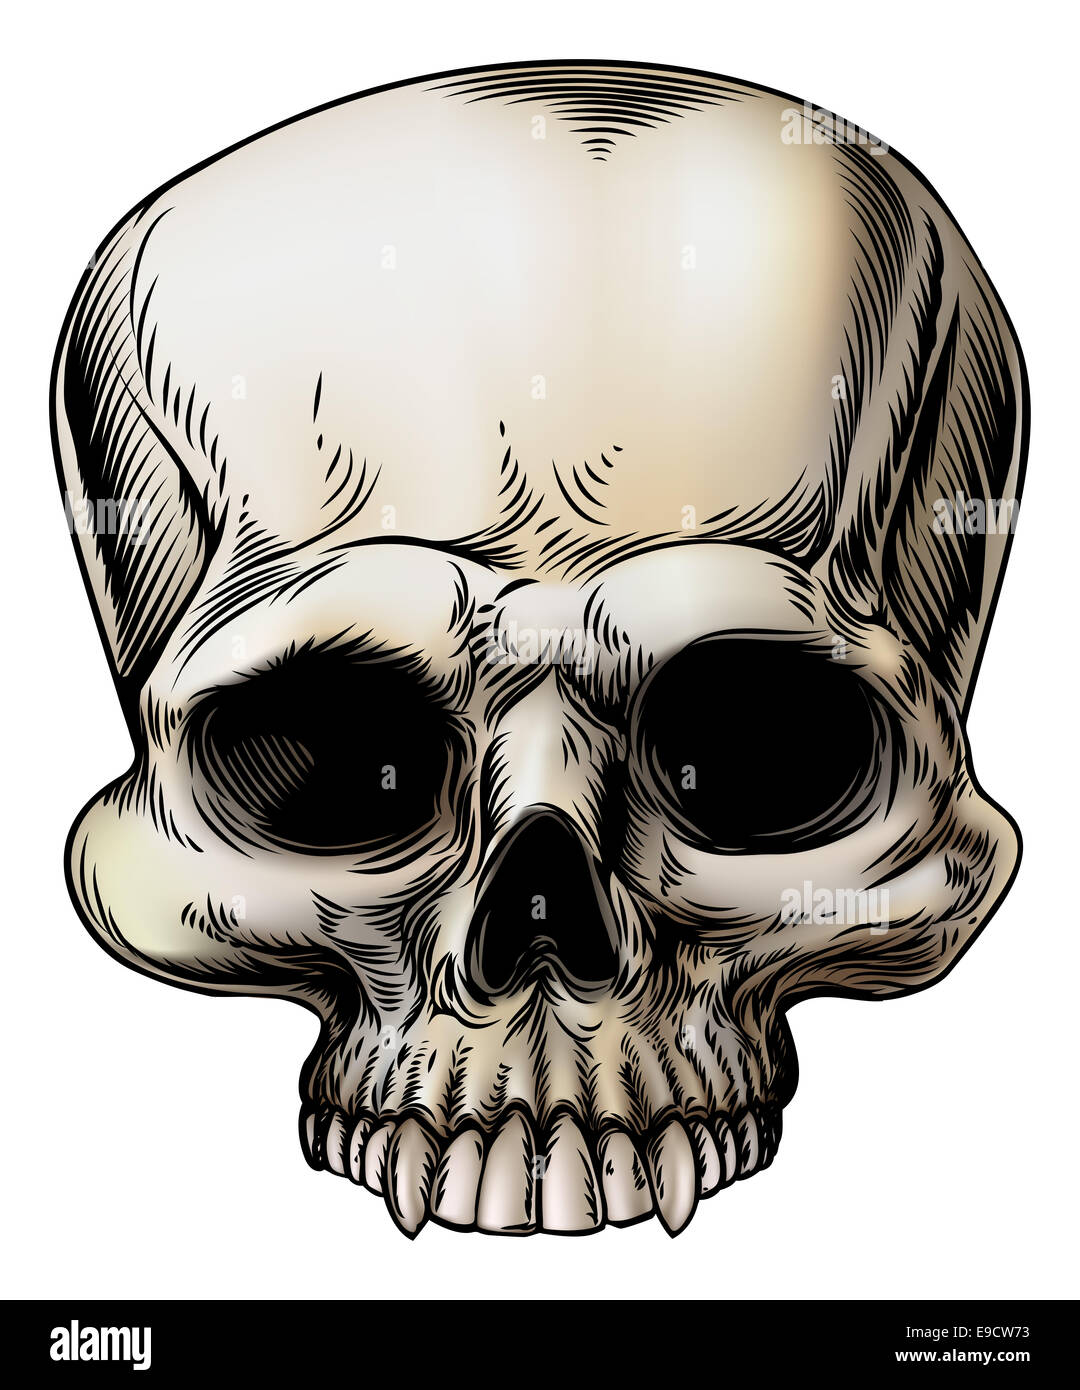 Human skull illustration in a retro vintage style Stock Photo